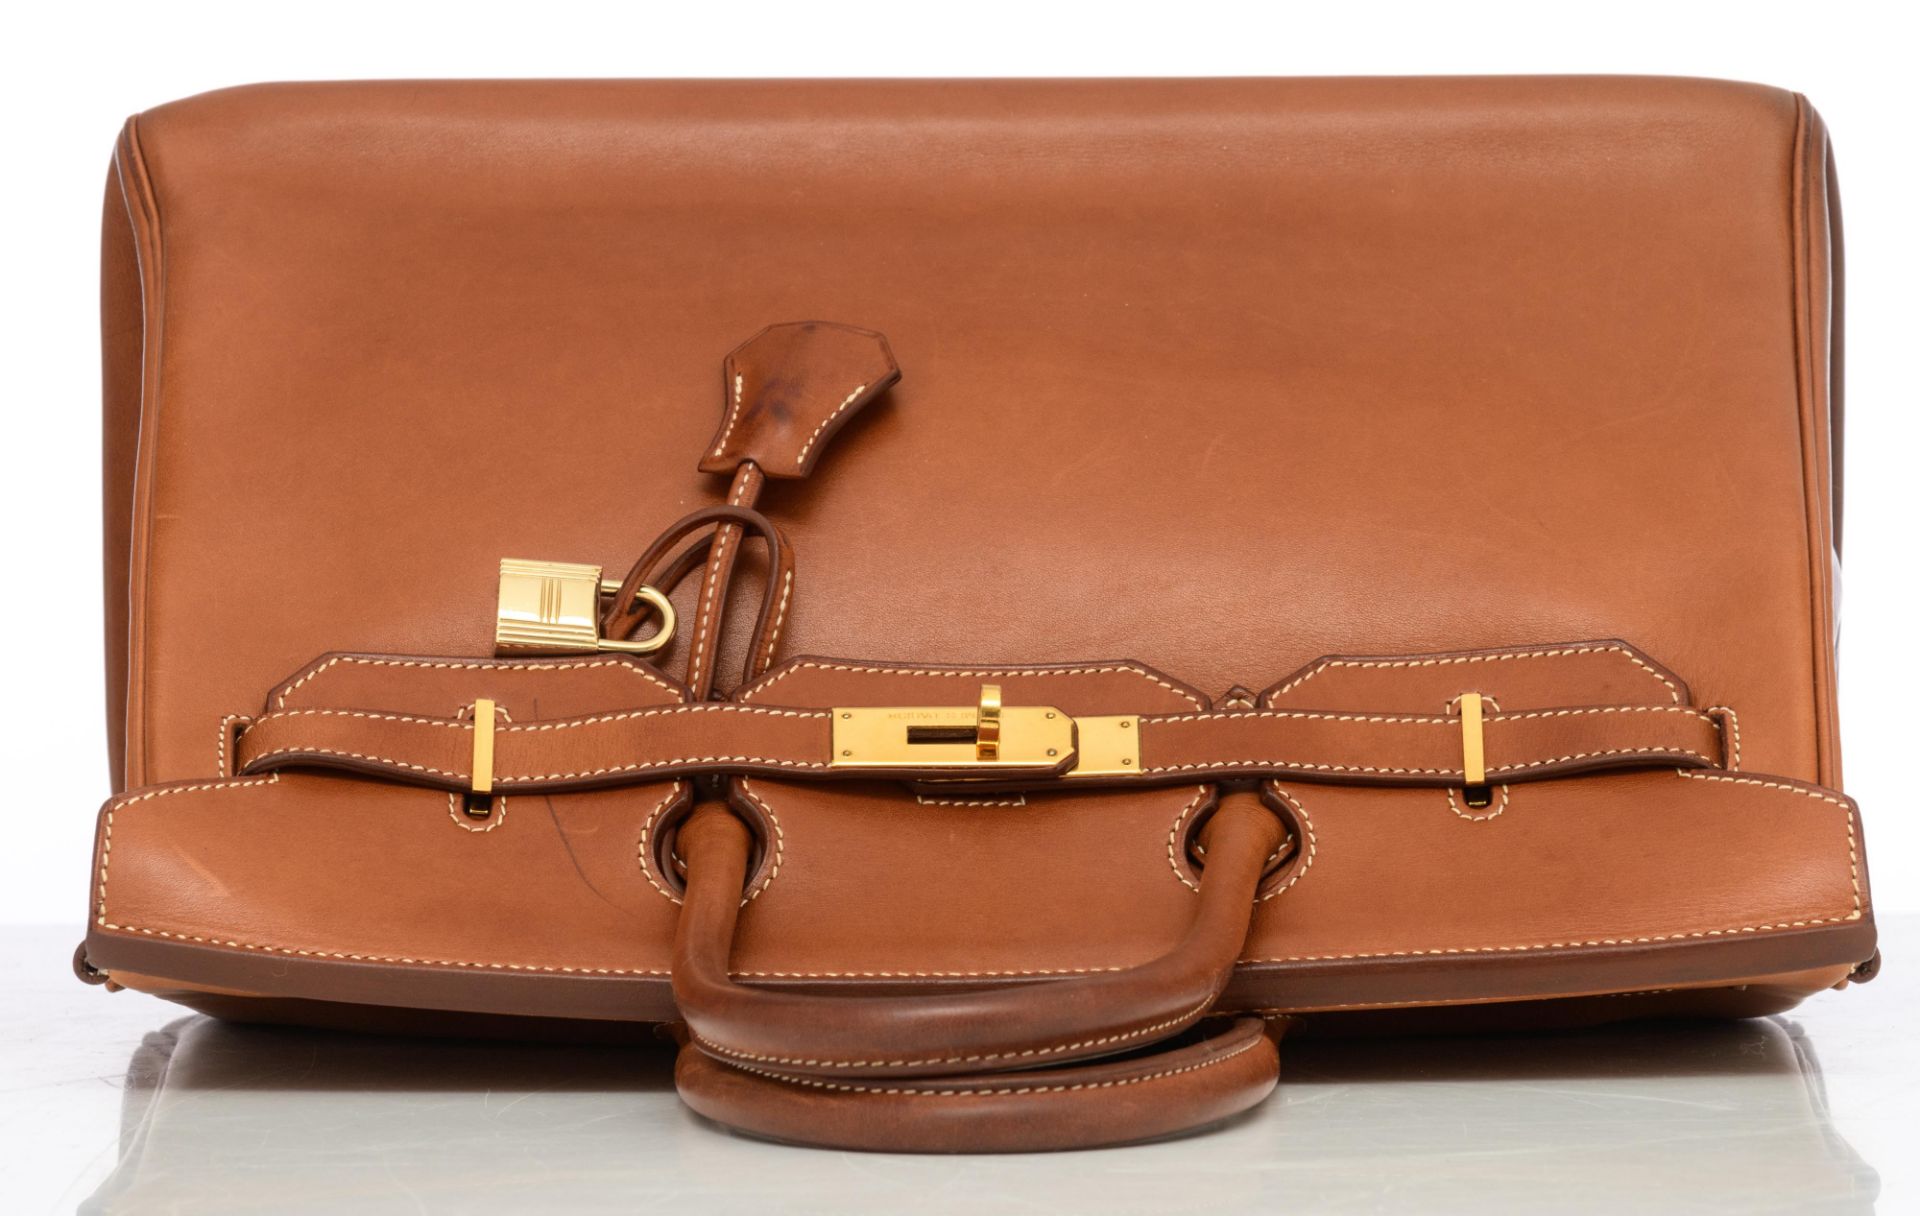 HERMÈS, Birkin 35 bag, Gold Barenia calfskin leather, with gilt metal hardware - Image 7 of 23